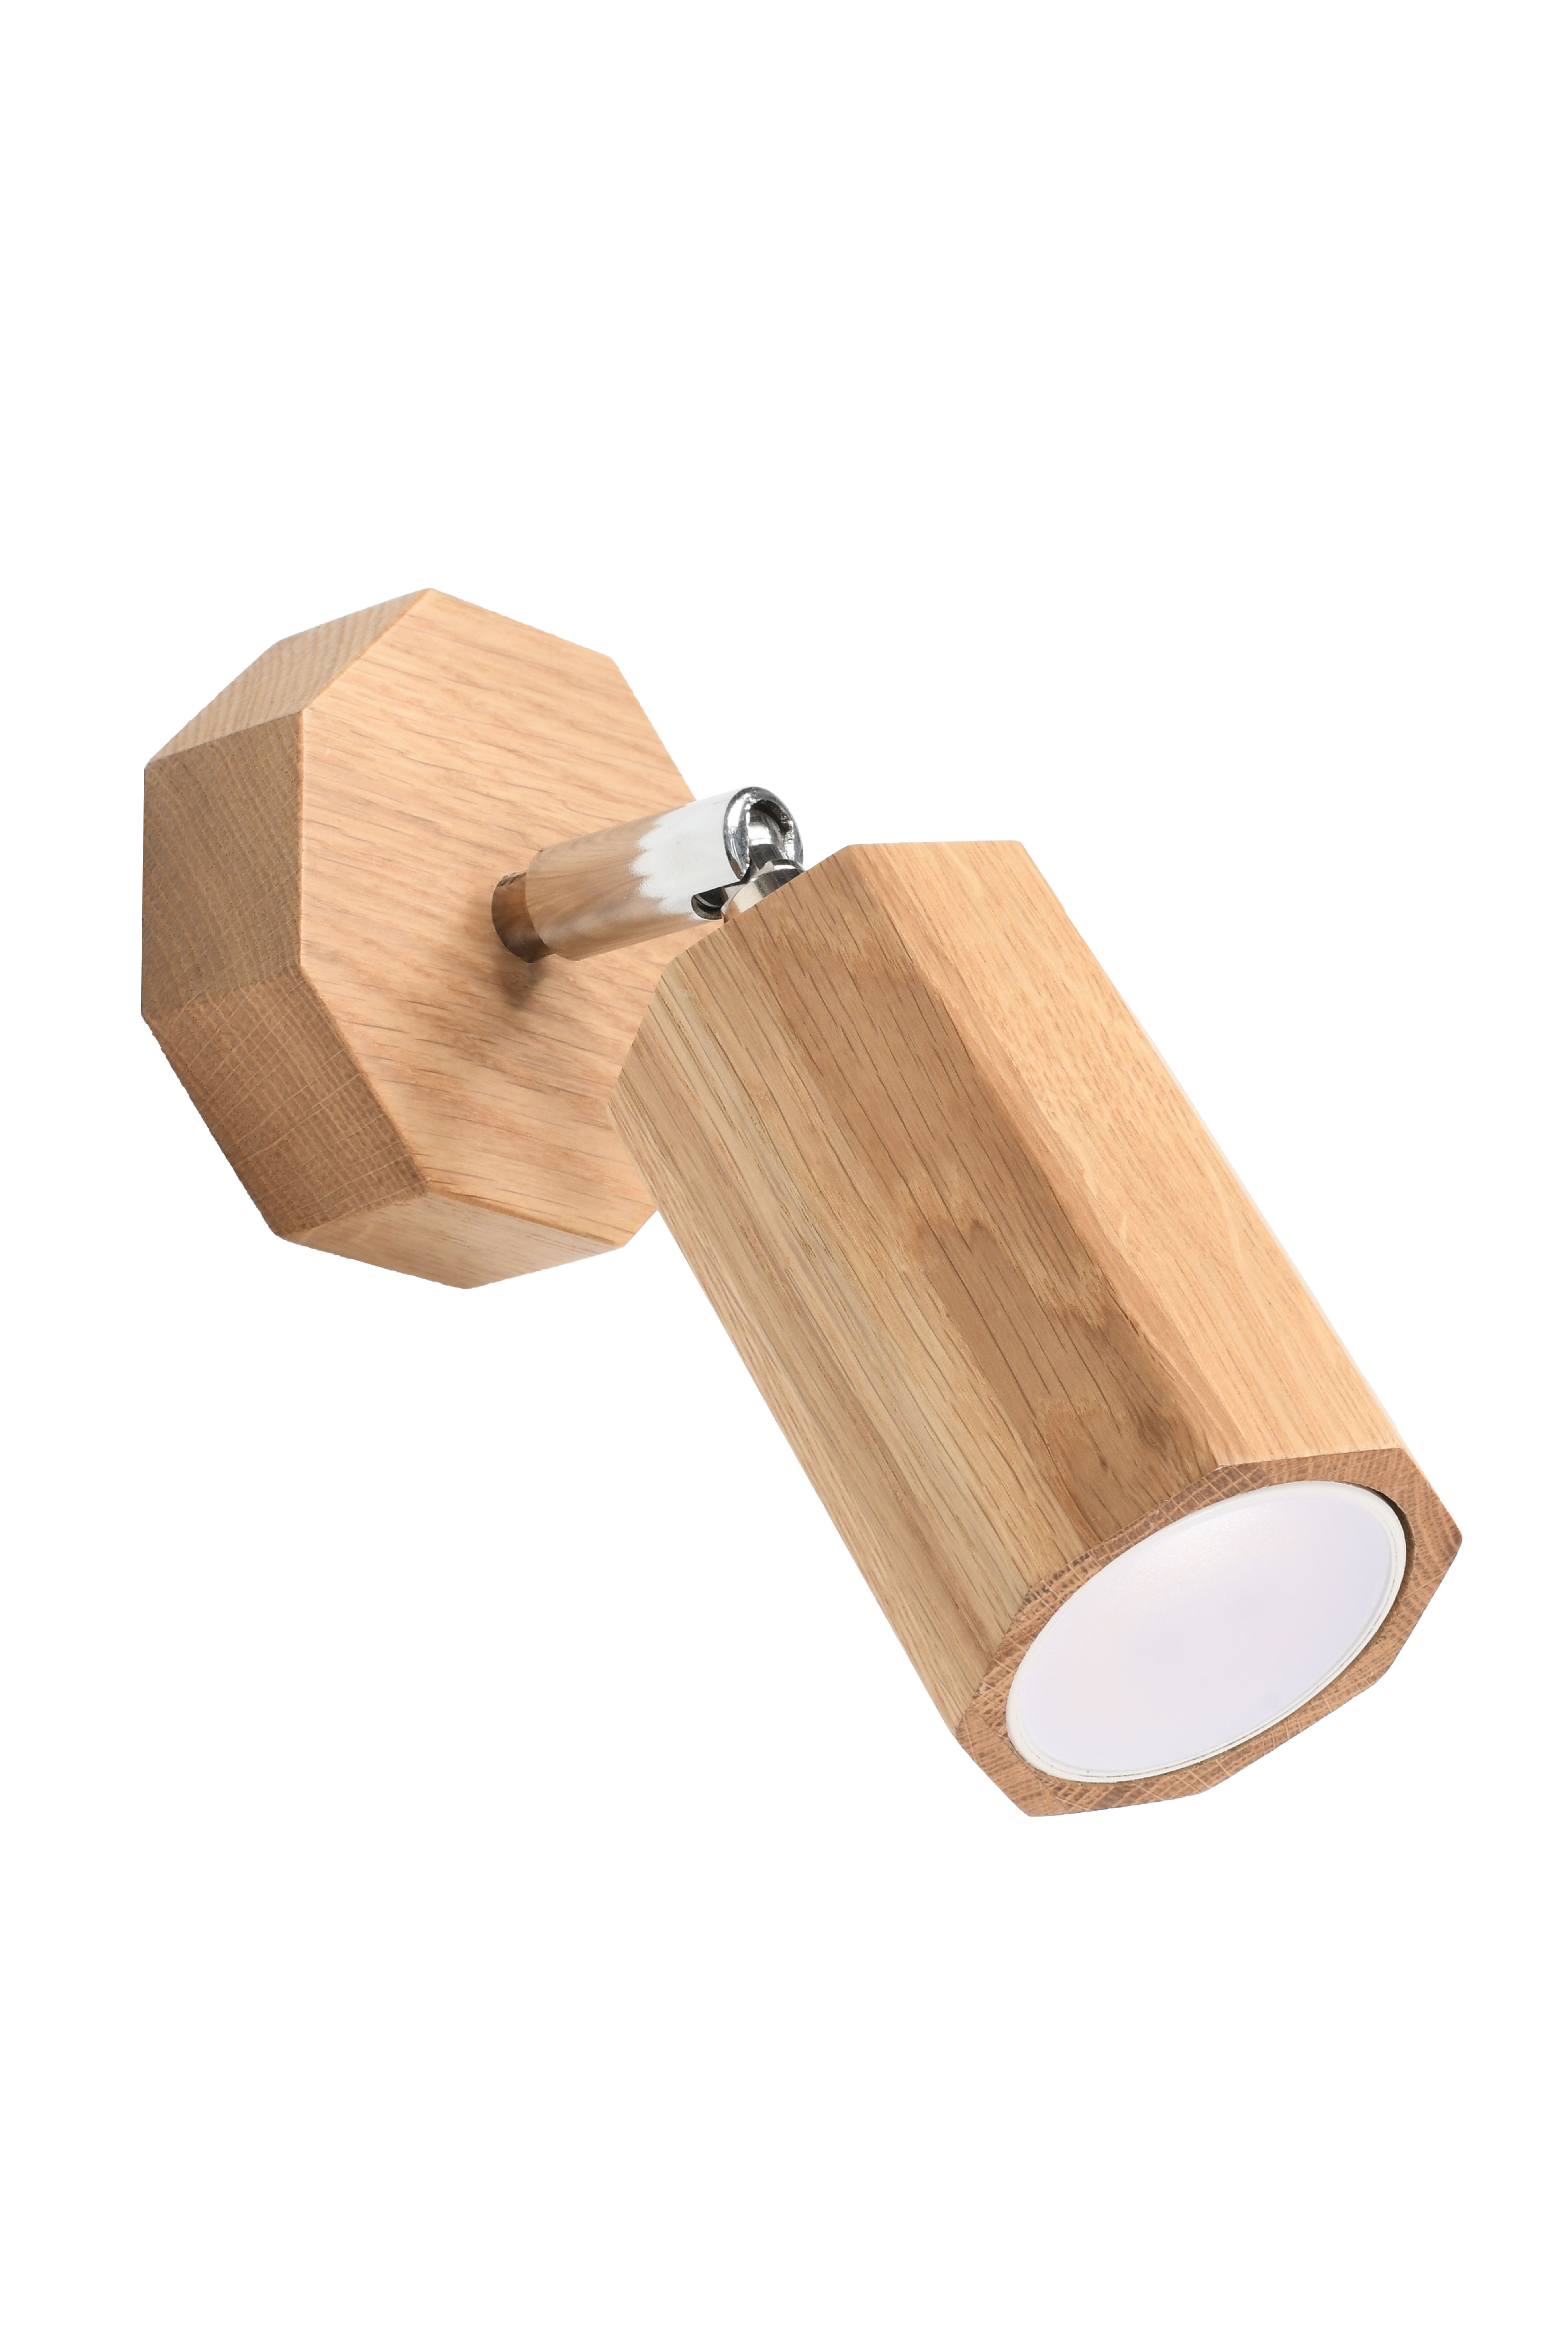 Holz LED Wandstrahler schwenkbar Eiche inkl. LED warmweiß 7W | LichtED.de -  LED Lampen und Beleuchtung